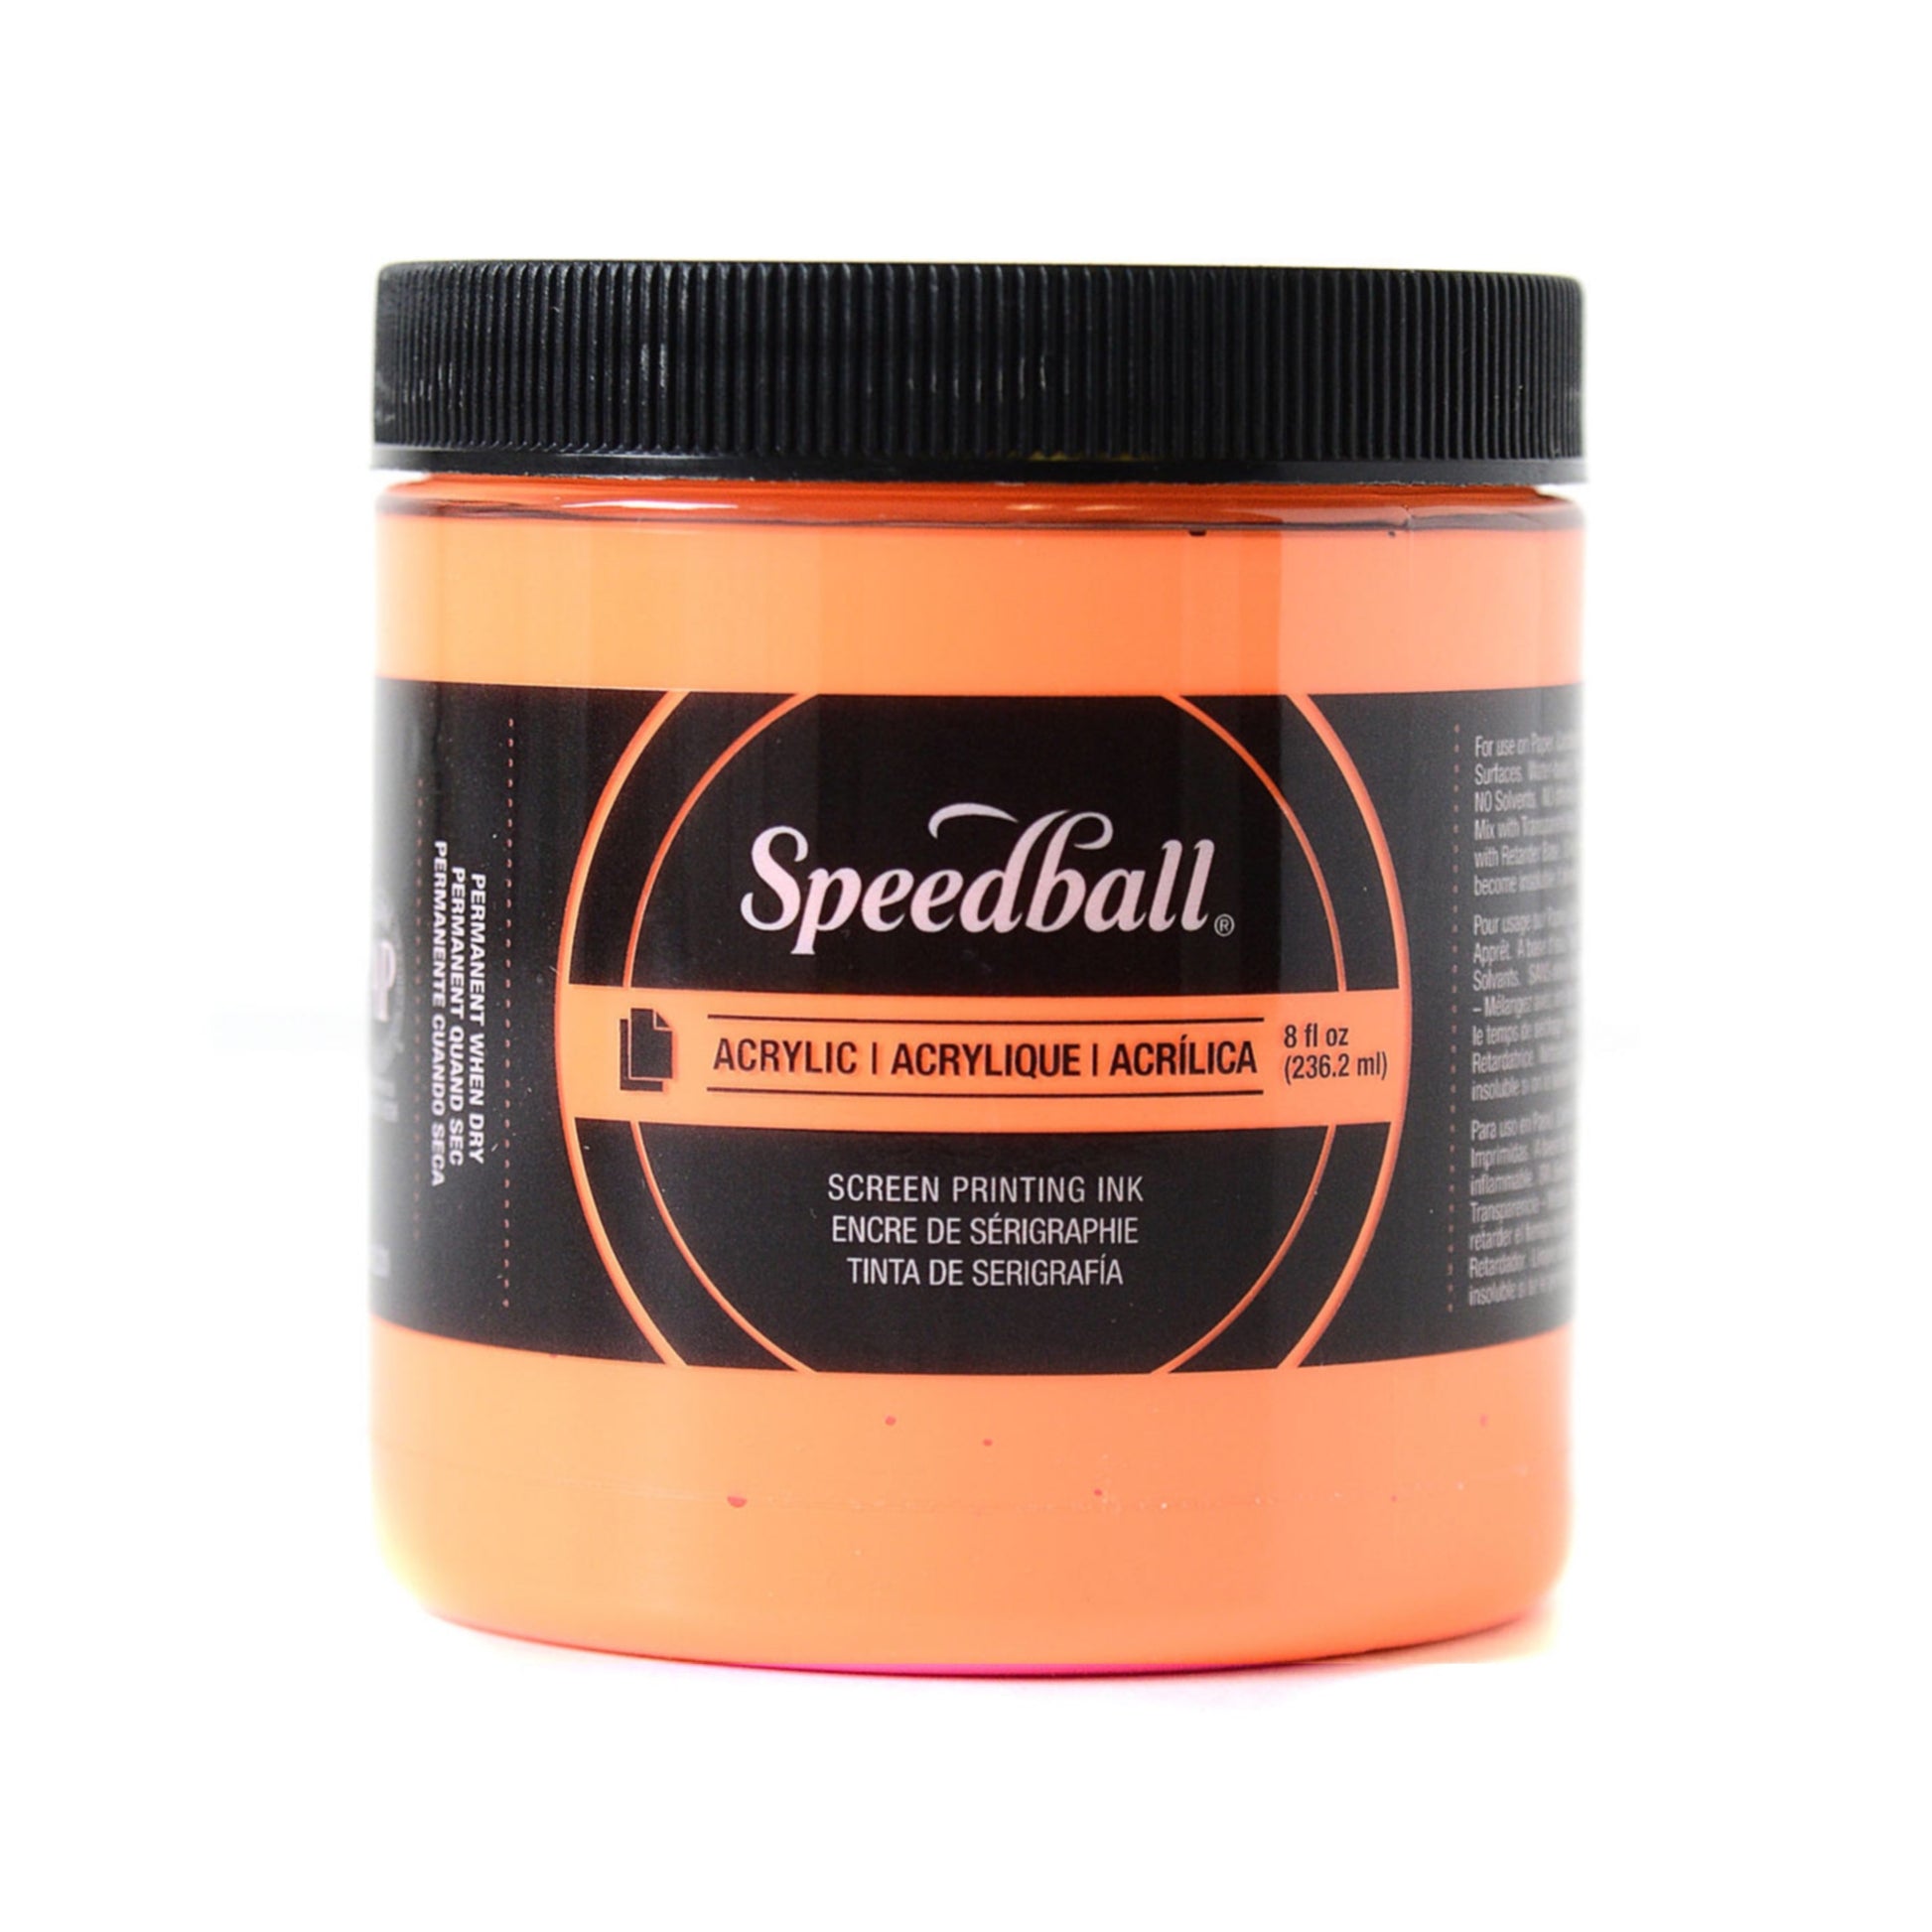 Speedball Acrylic Screen Printing Ink - 8 oz. - Fluorescent Orange by Speedball - K. A. Artist Shop